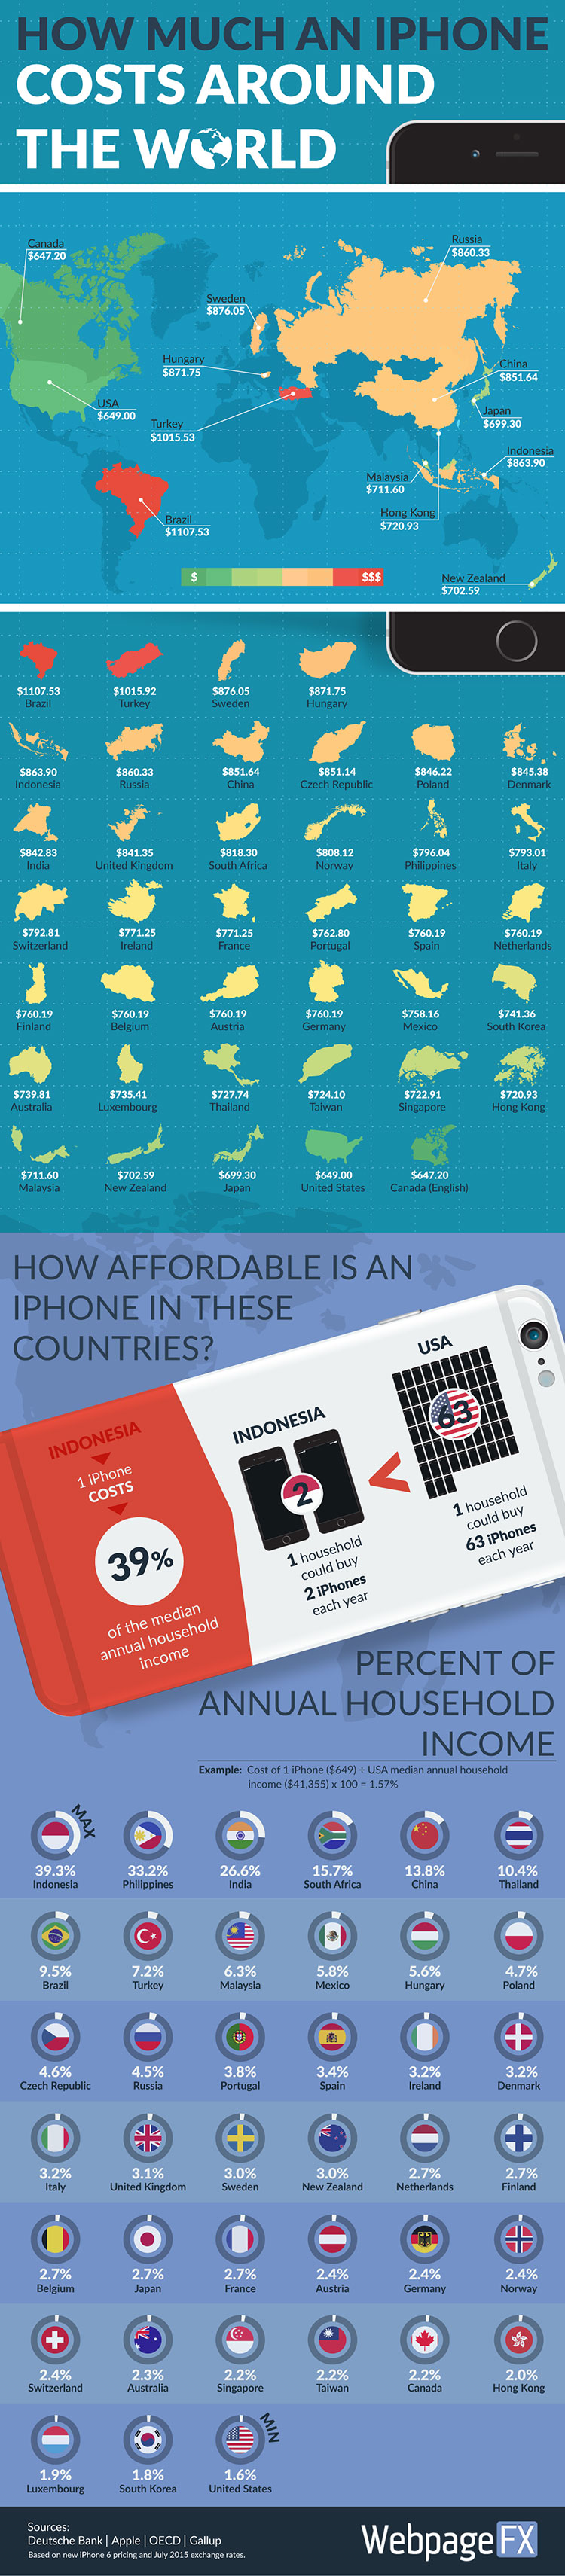 cost-of-iphone-around-world5